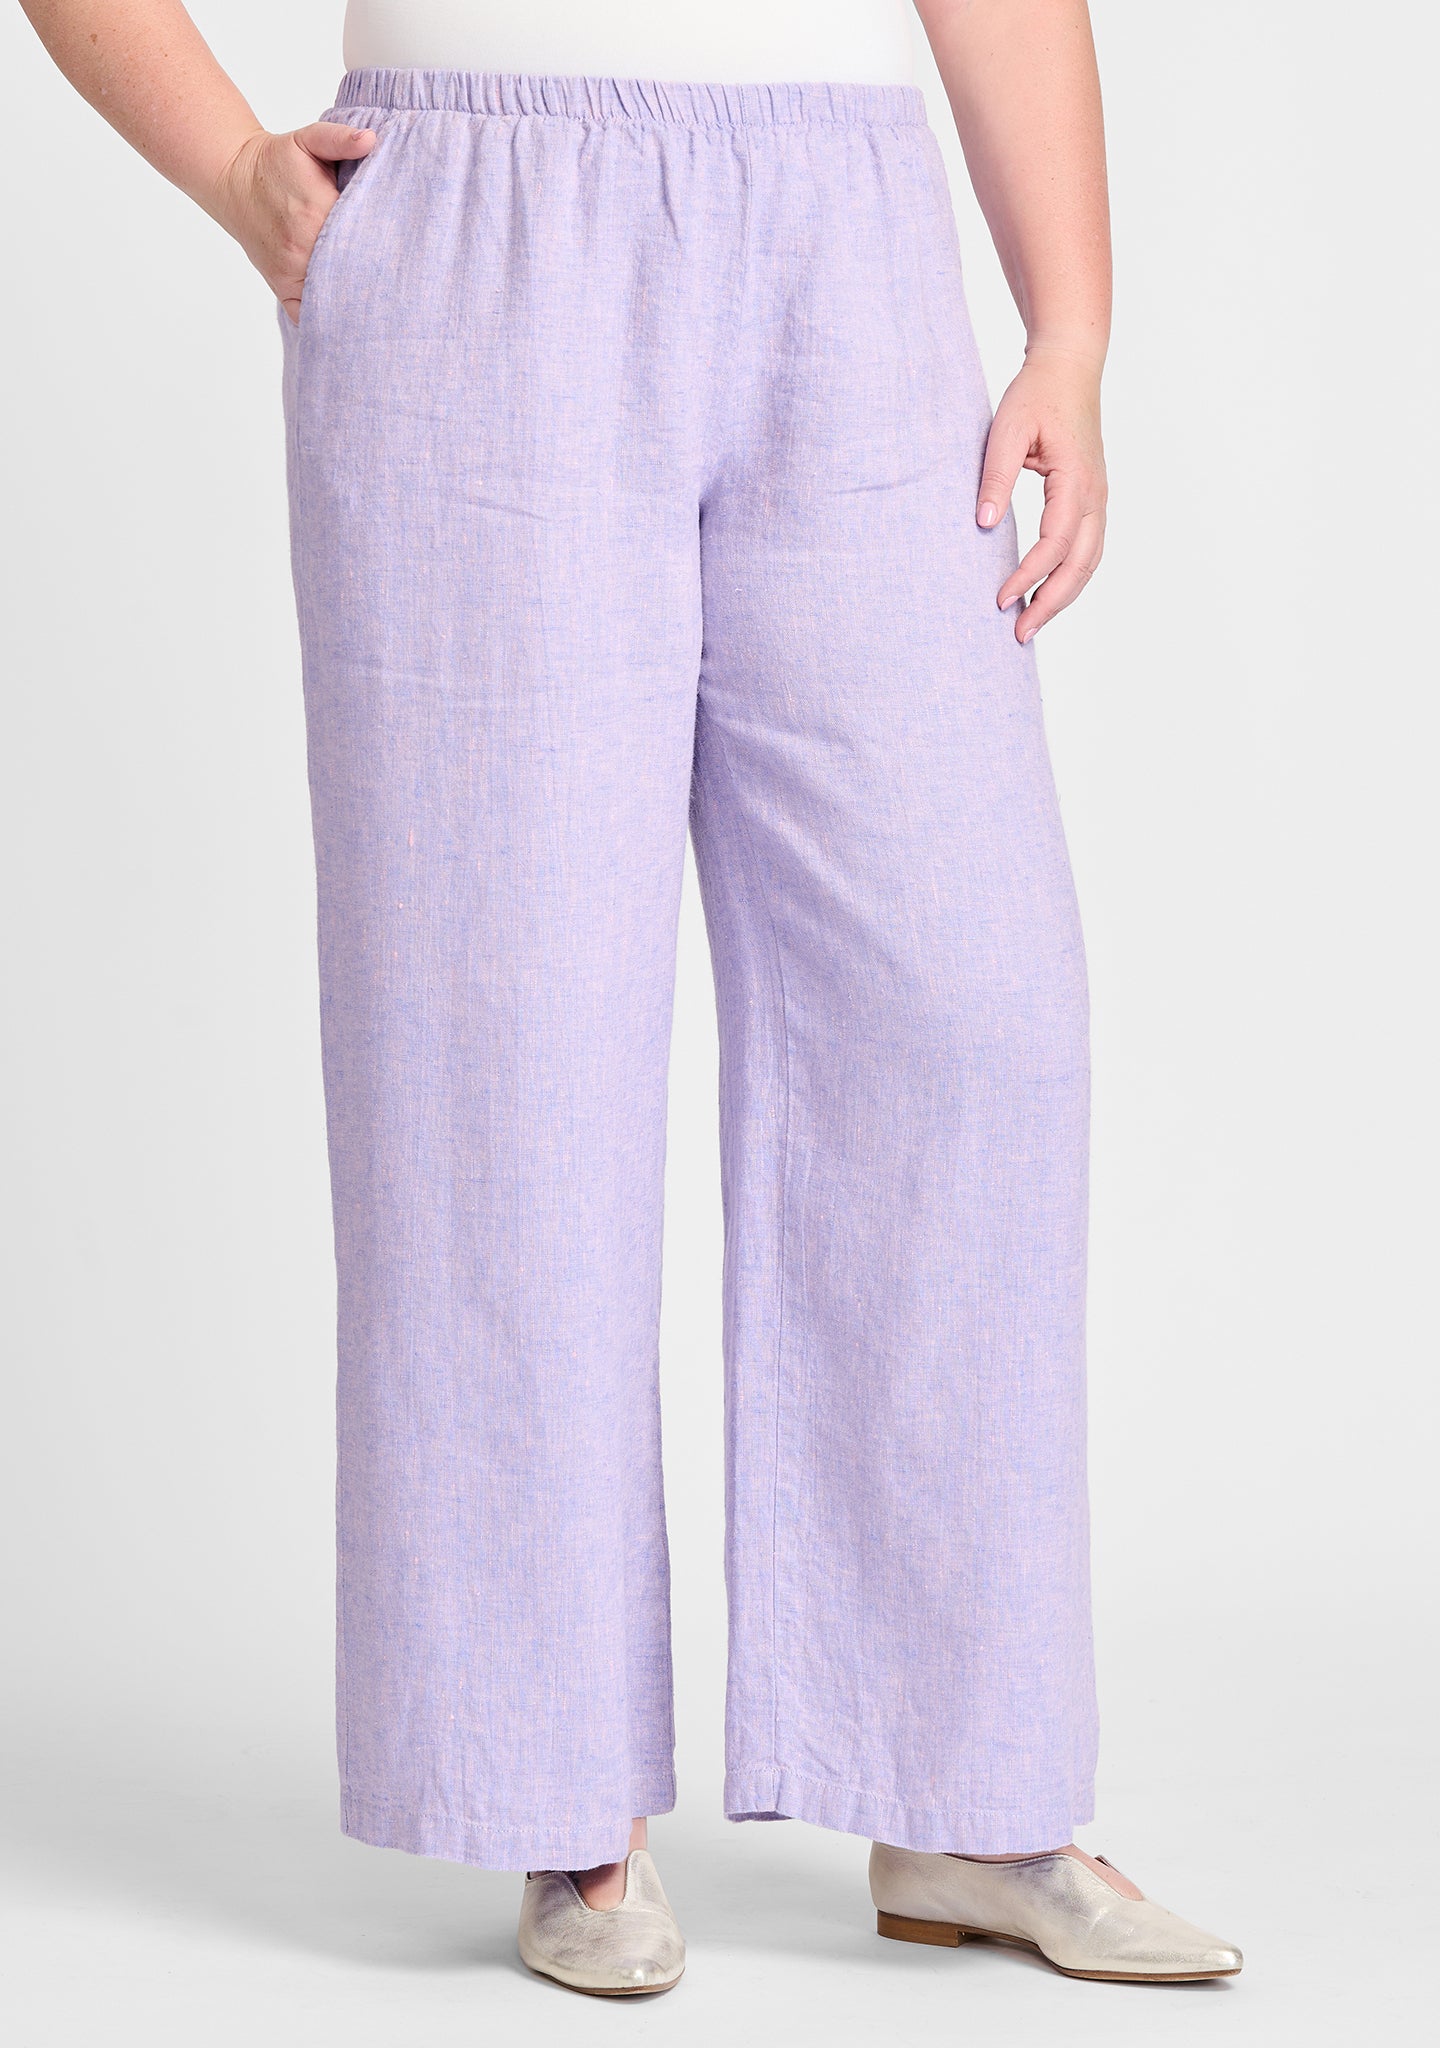 flowing pant linen pants with elastic waist purple